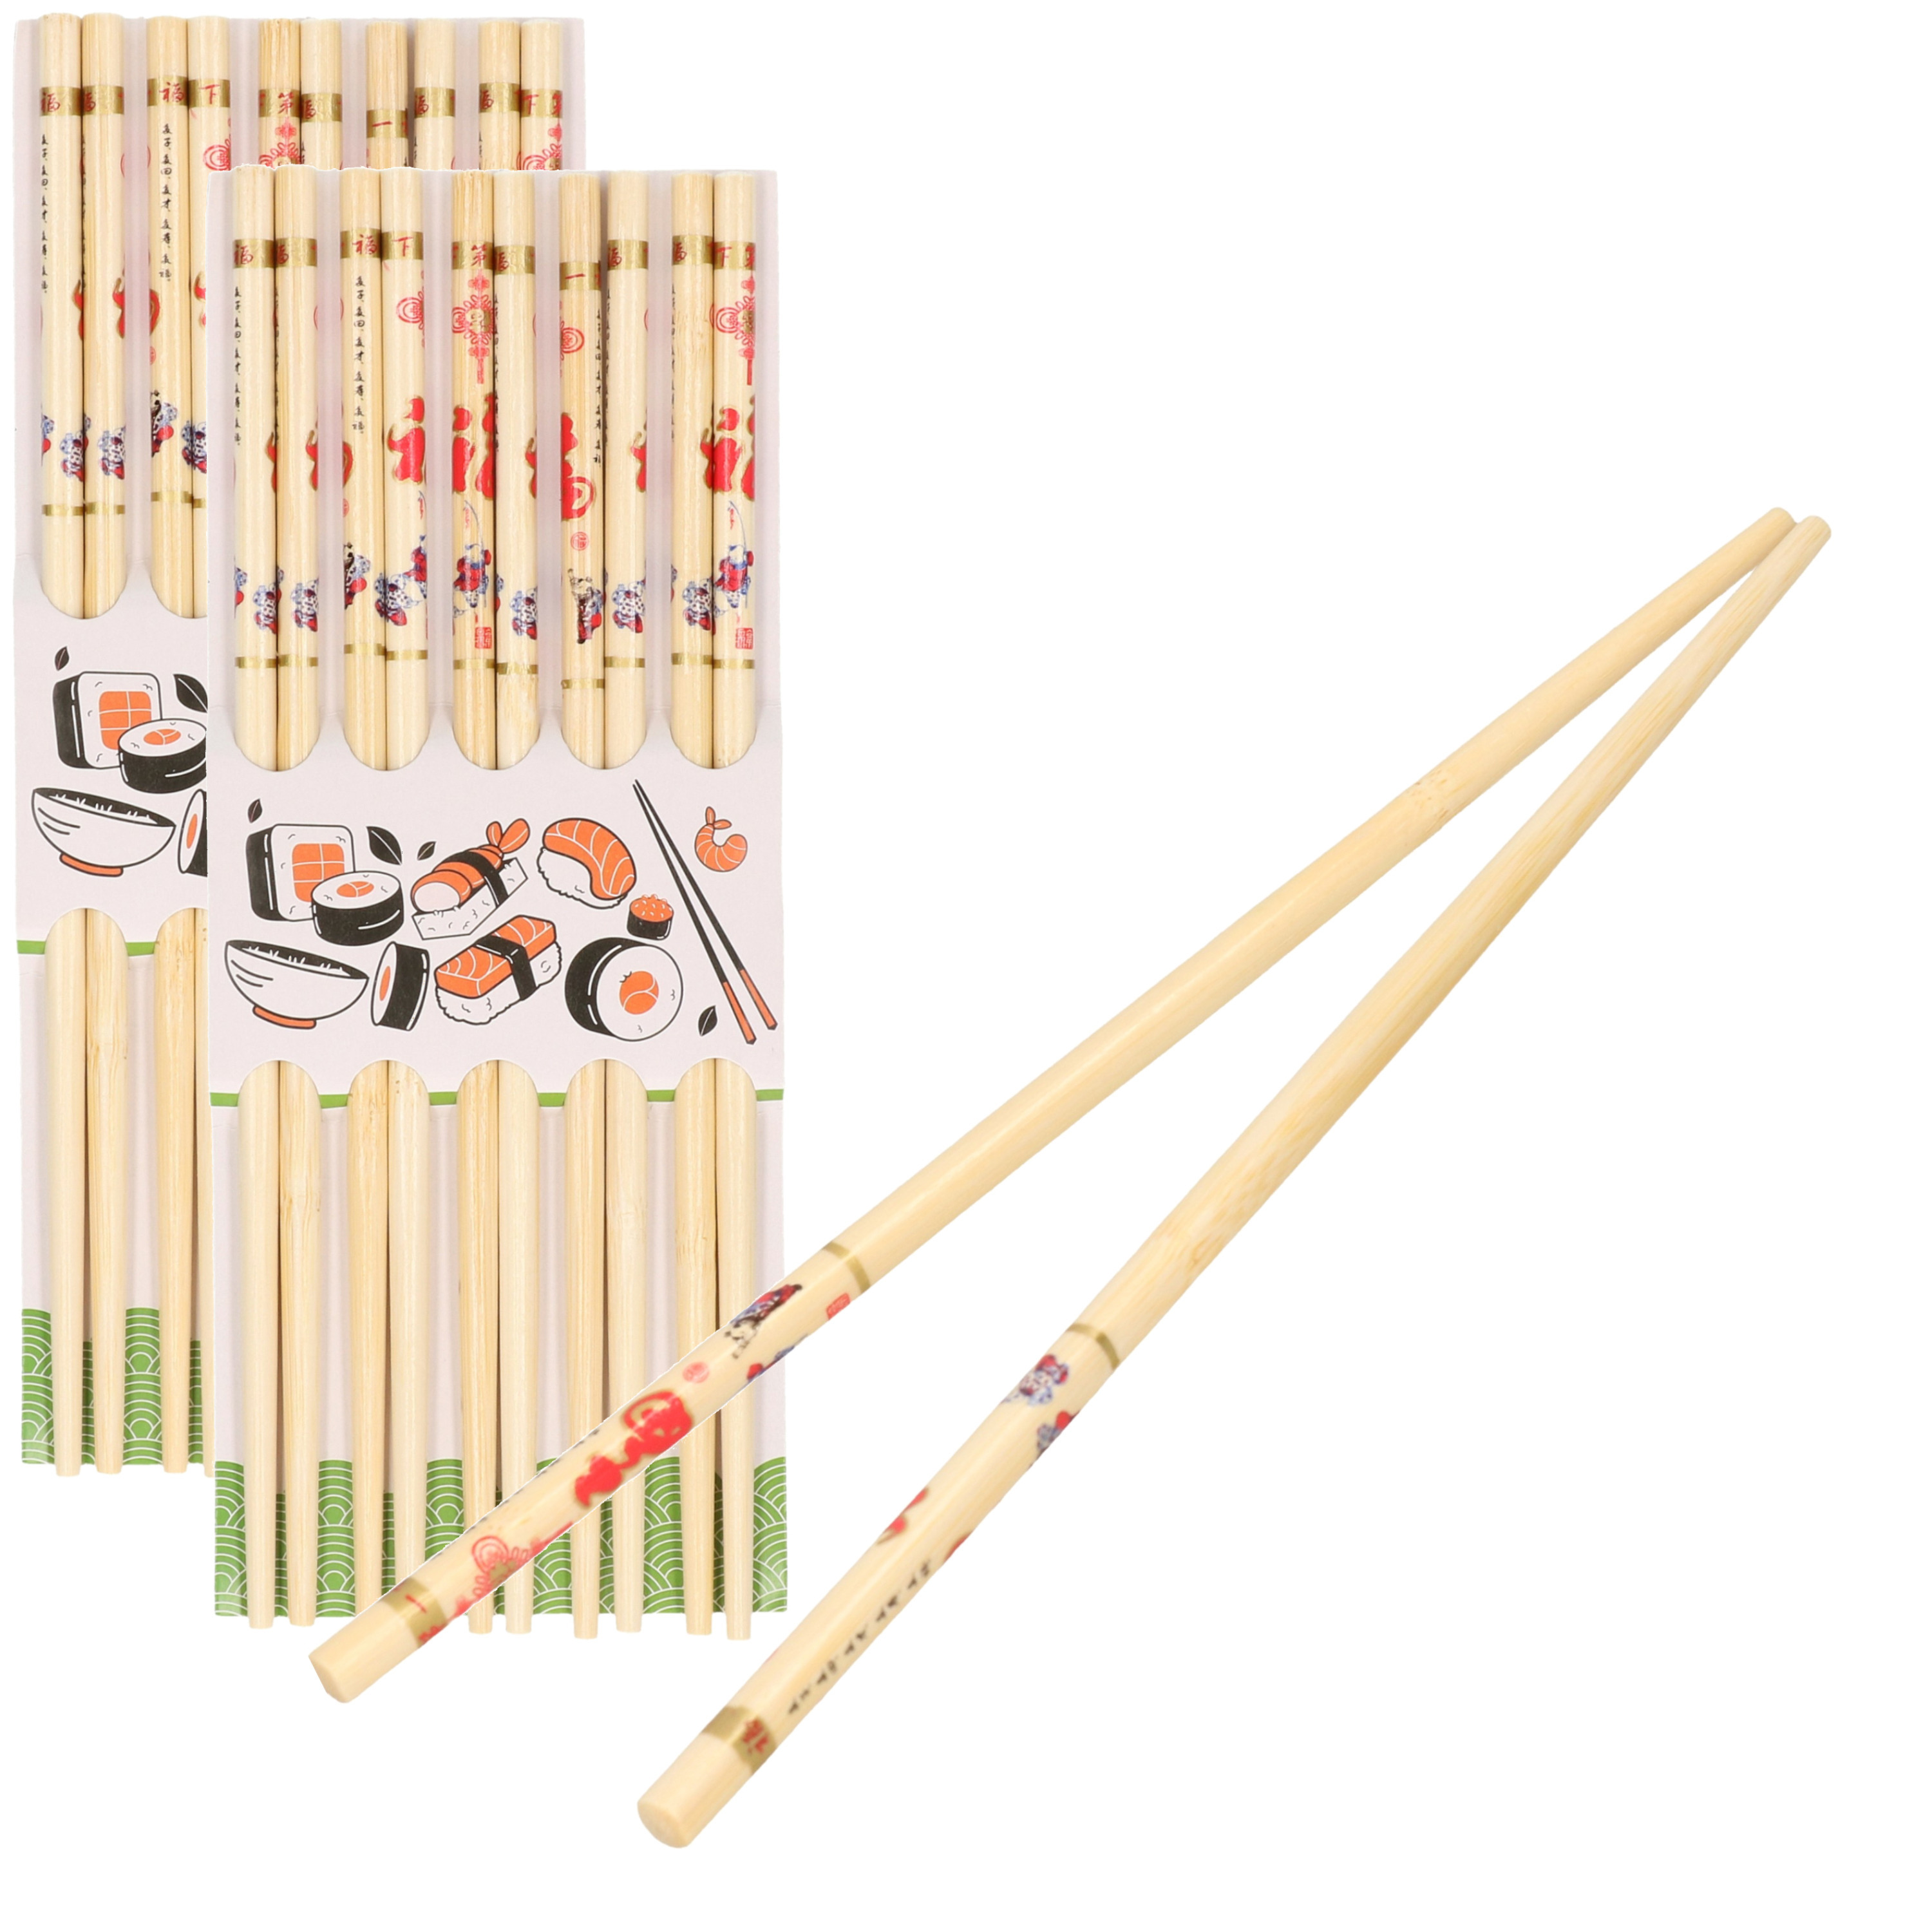 Sushi eetstokjes 40x setjes bamboe hout kleurrijke print 24 cm